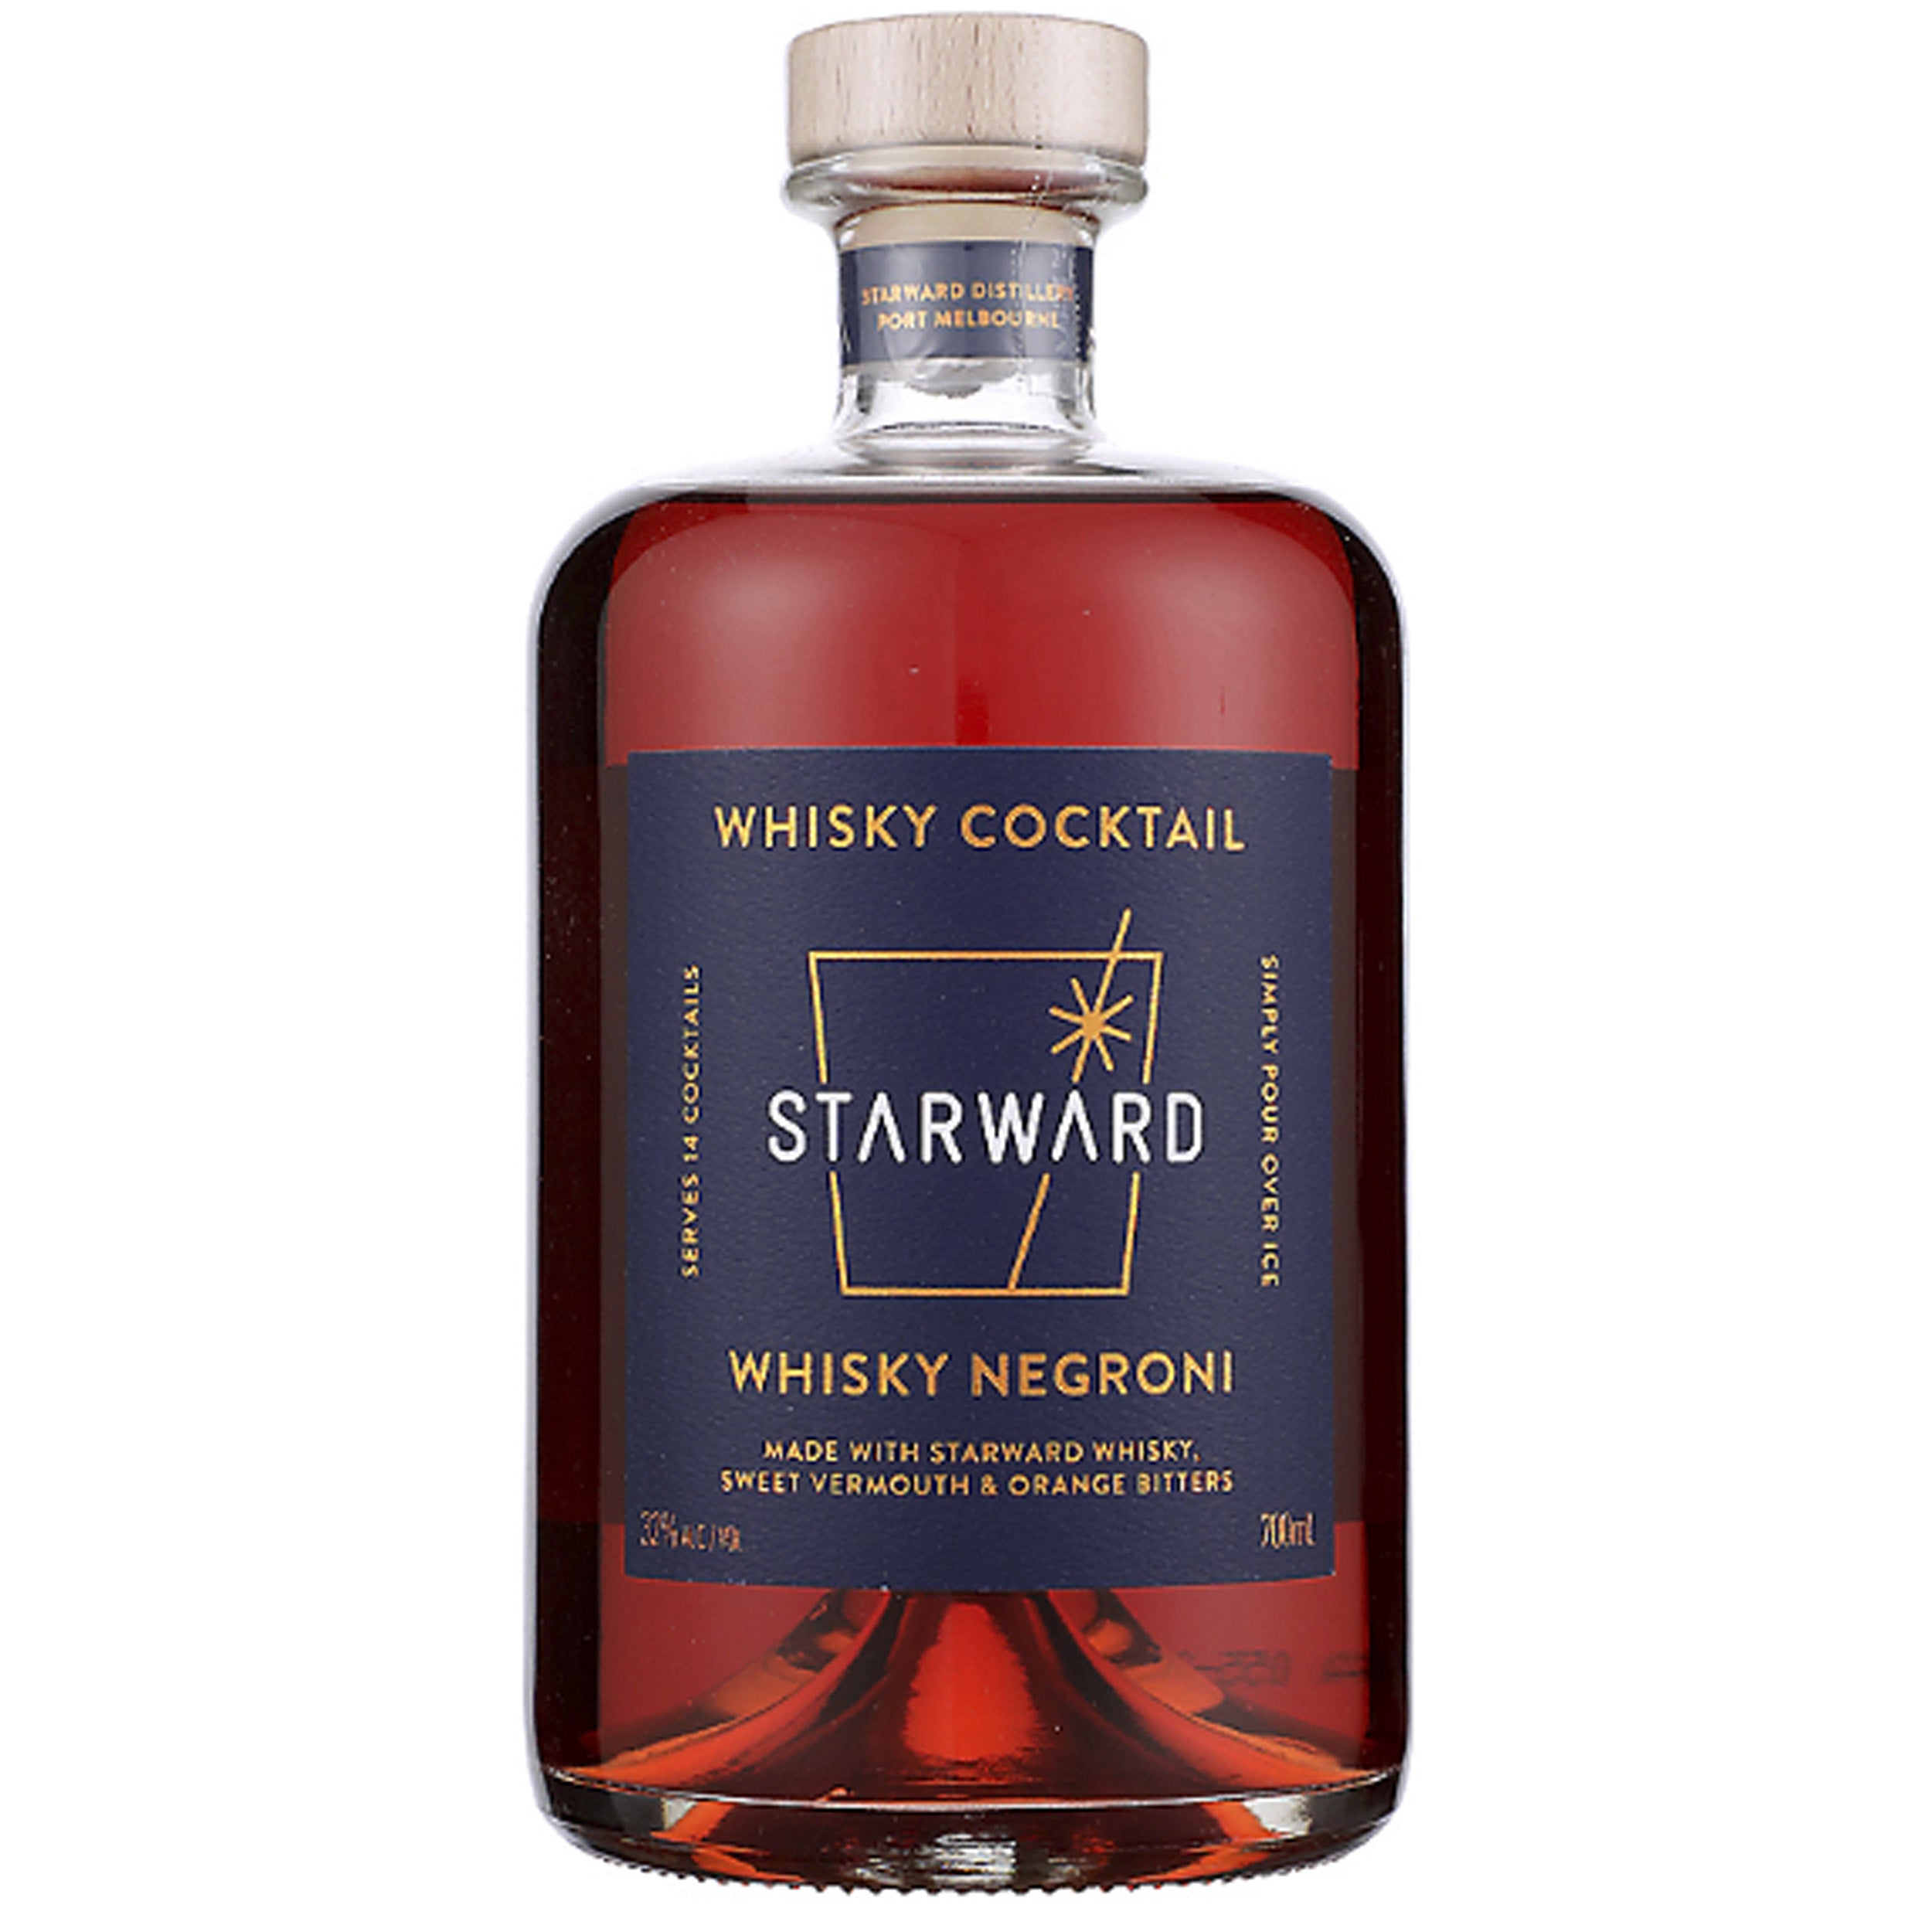 Starward Whisky Negroni Cocktail